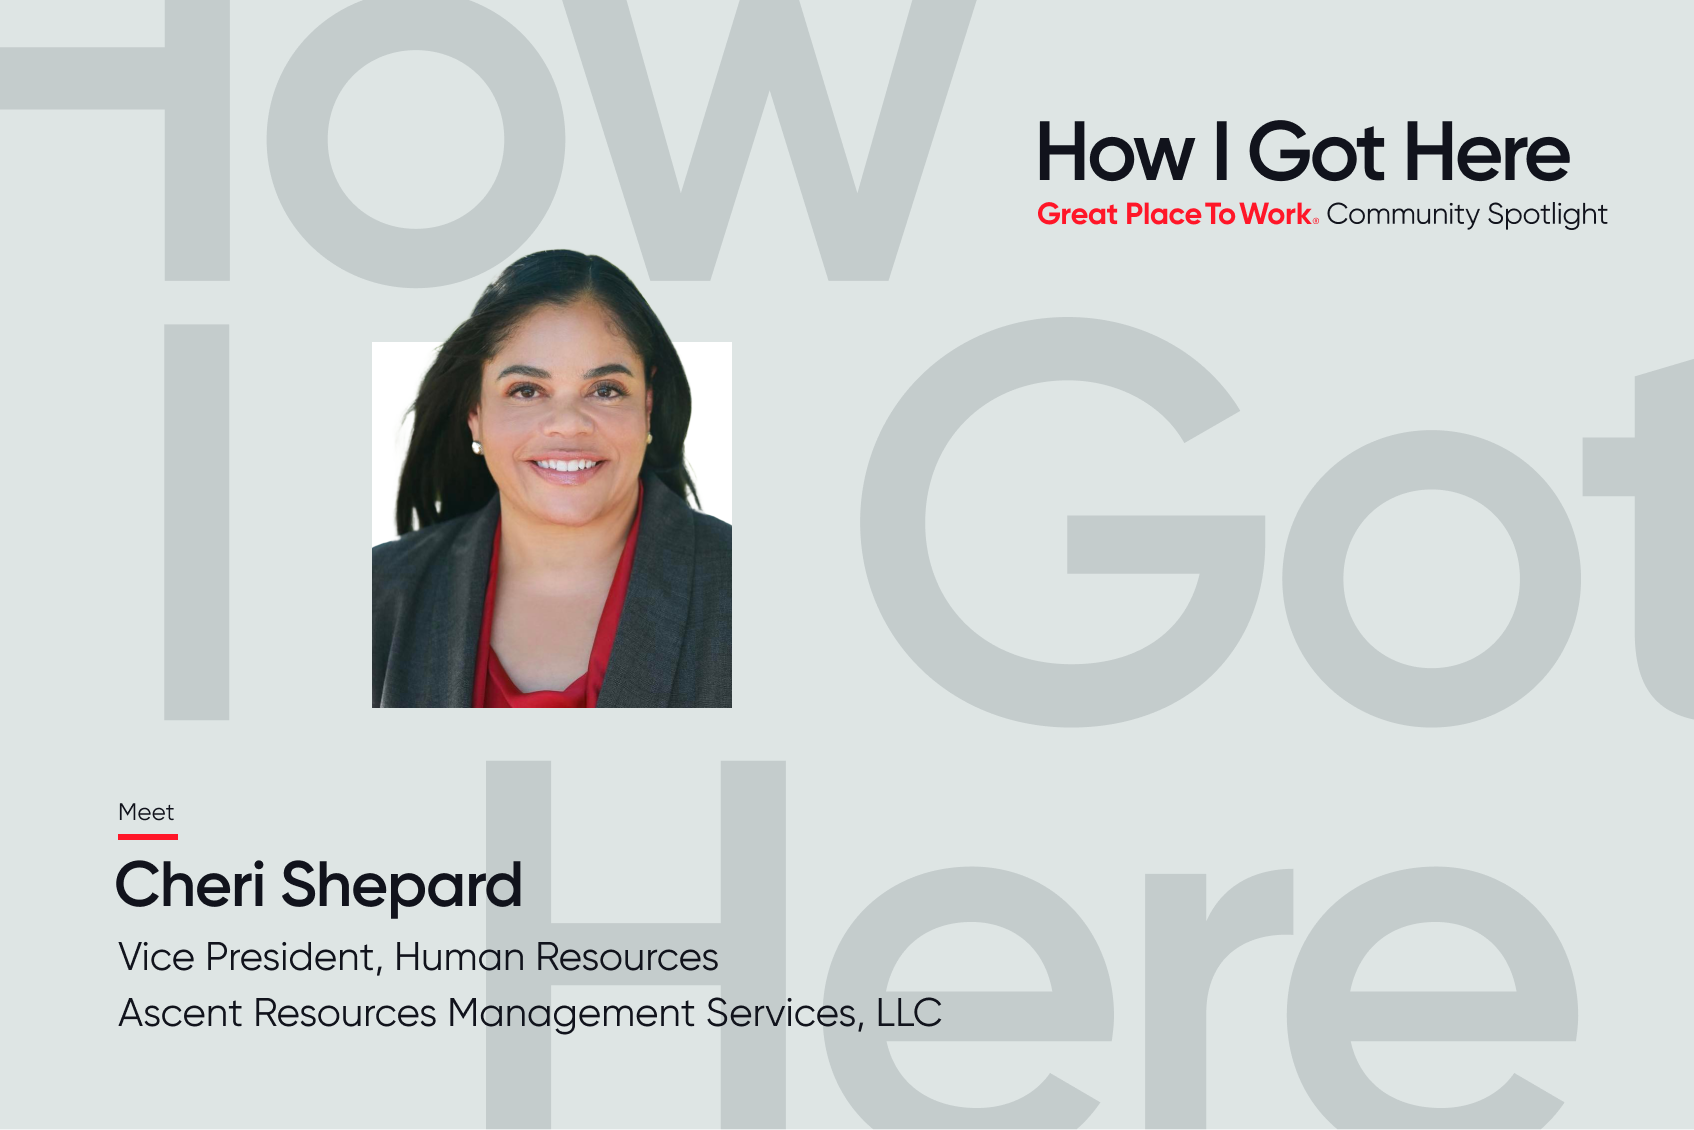  Cheri Shepard, VP, Human Resources, Ascent Resources Management